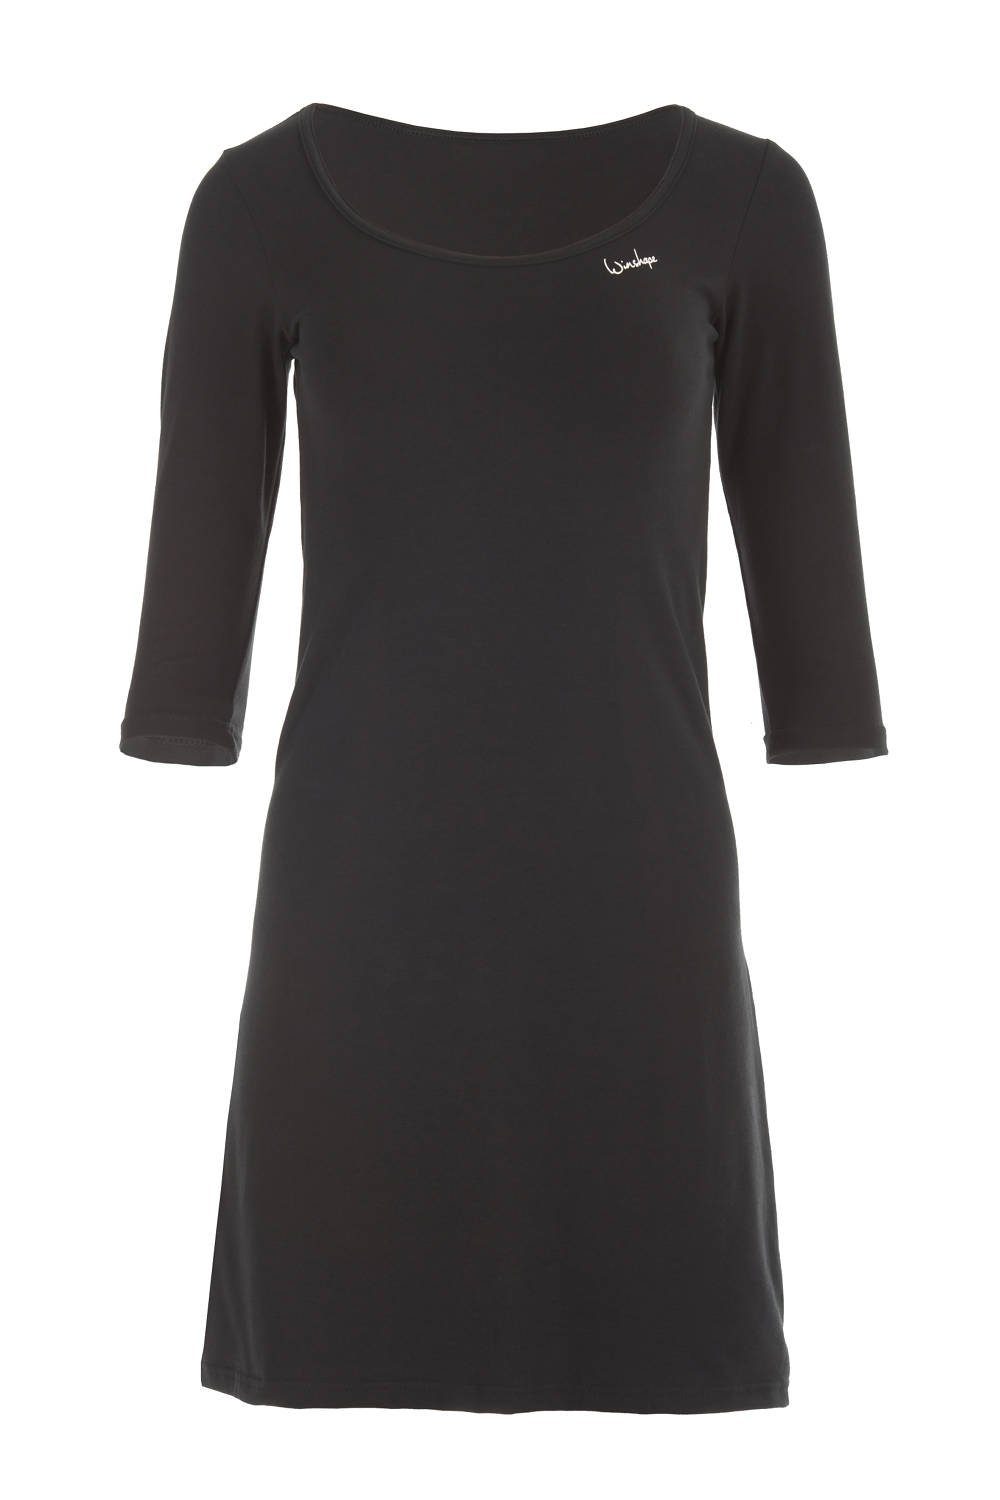 Winshape A-Linien-Kleid 3/4-Arm schwarz WK2